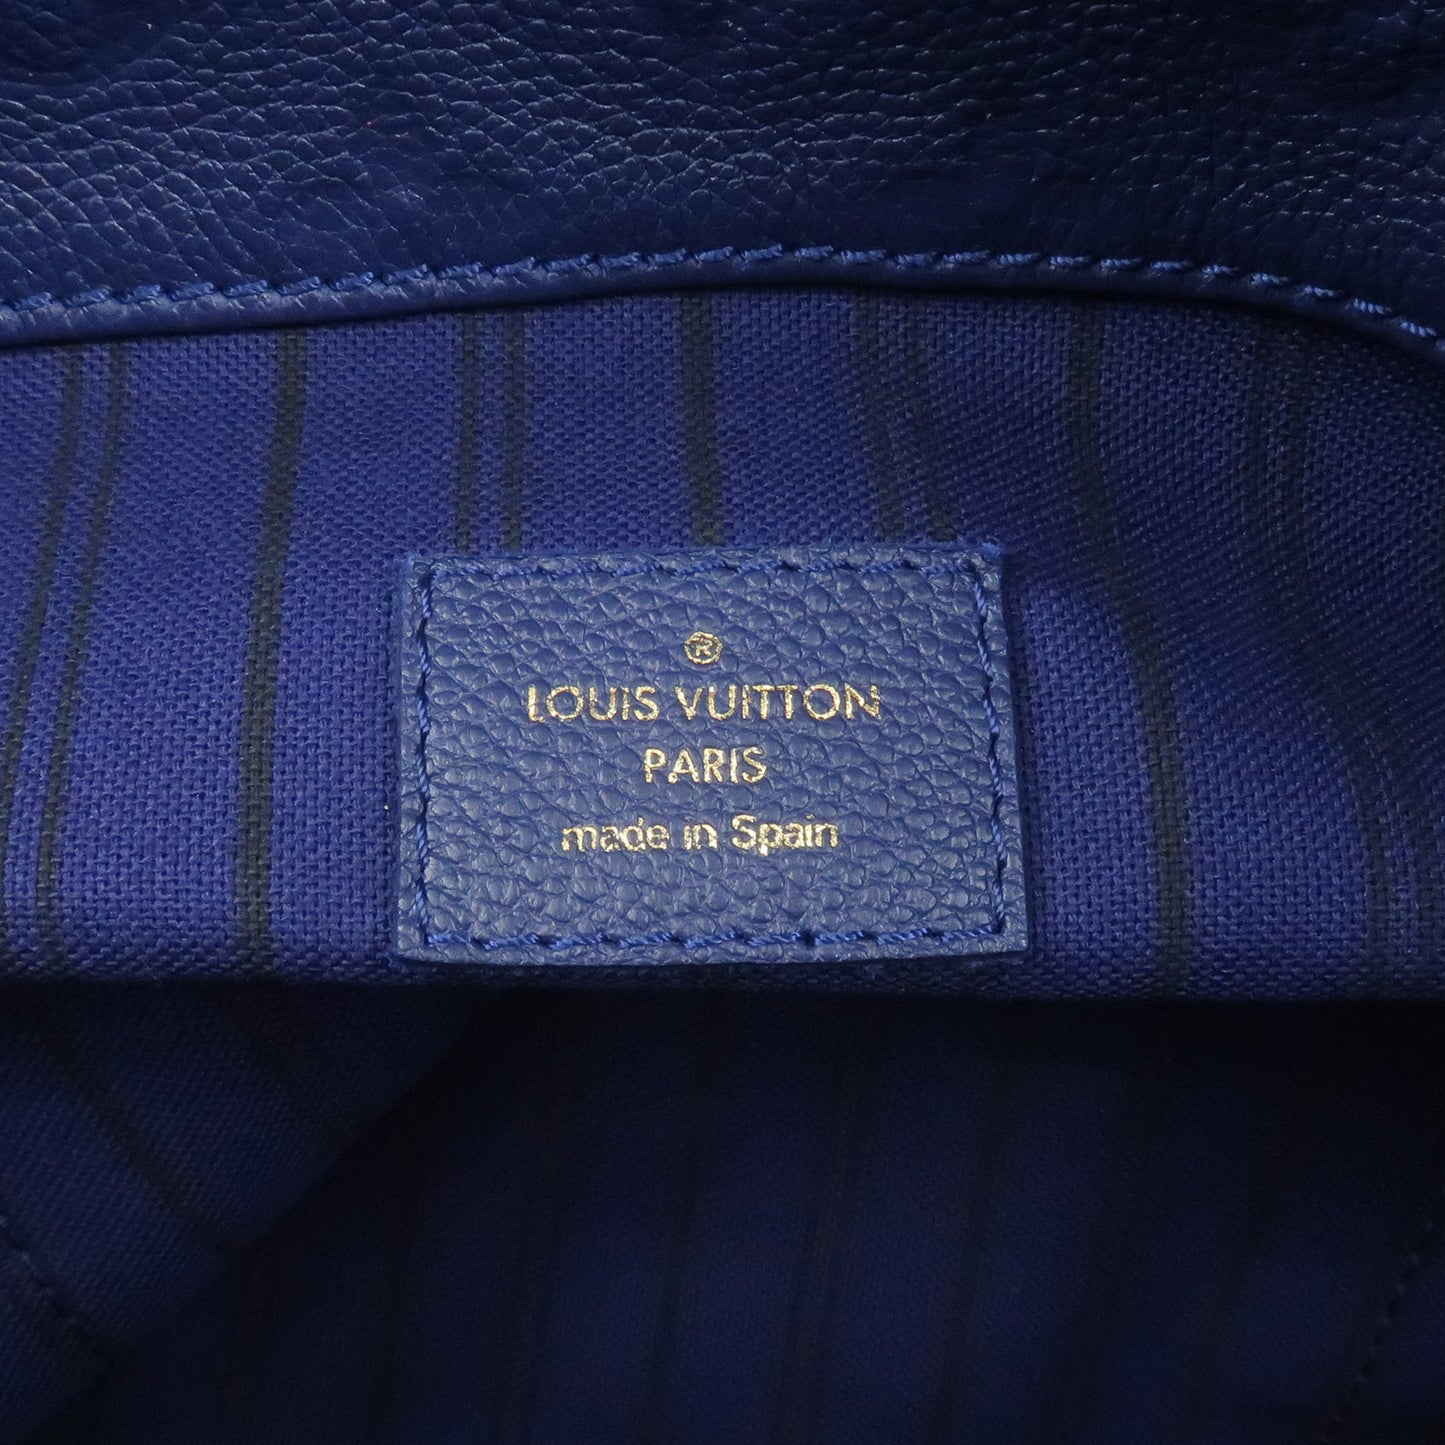 Louis Vuitton Monogram Empreinte Artsy MM Shoulder Bag M40790